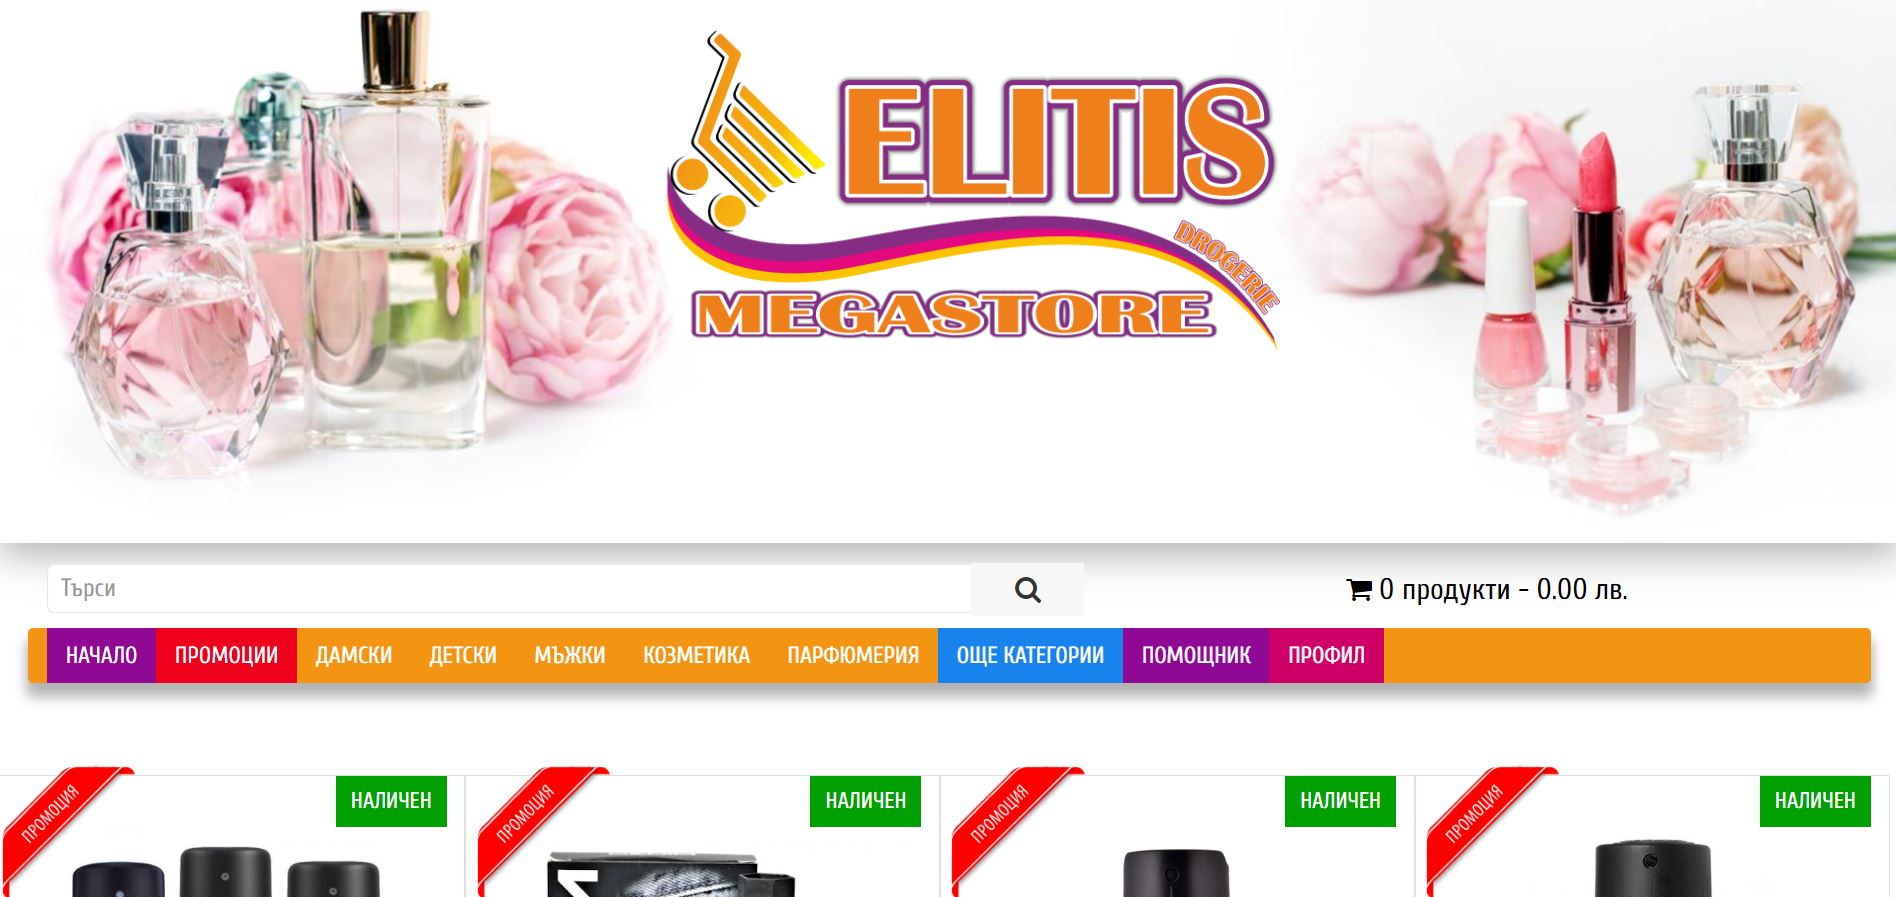 Онлайн магазин на Елитис Мегастор